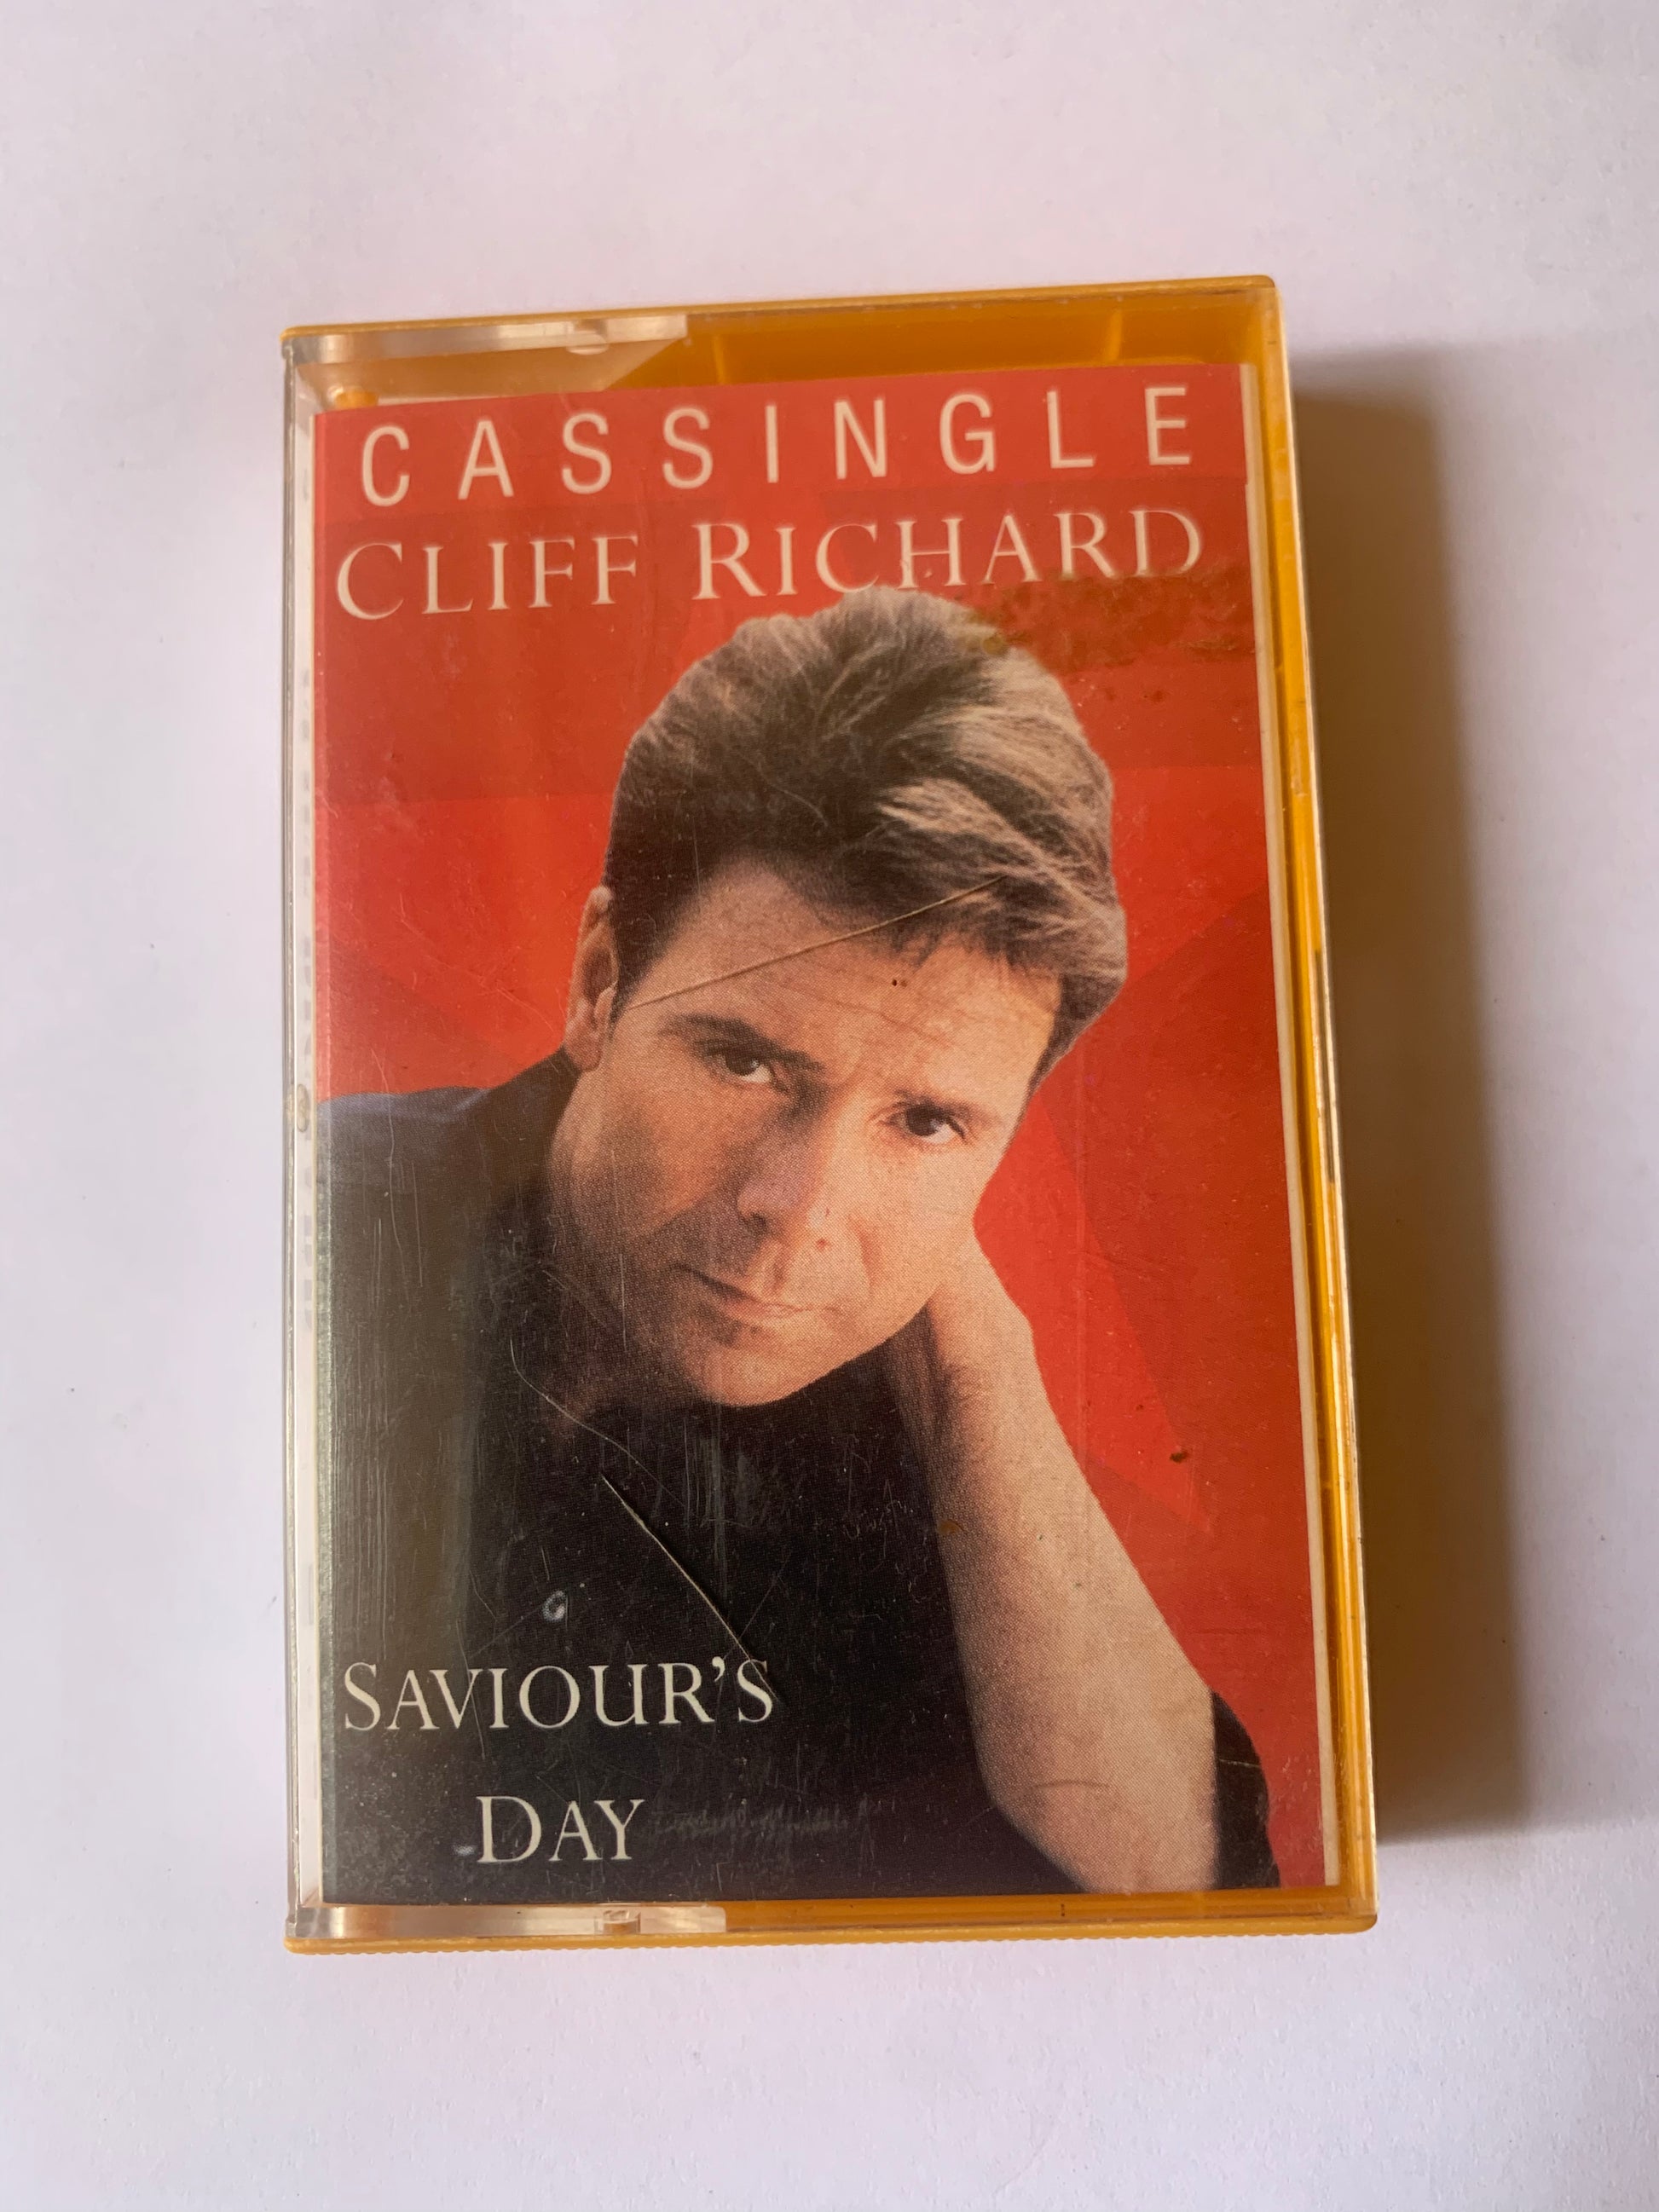 Tape  Cassette Cliff Richard Saviour Day